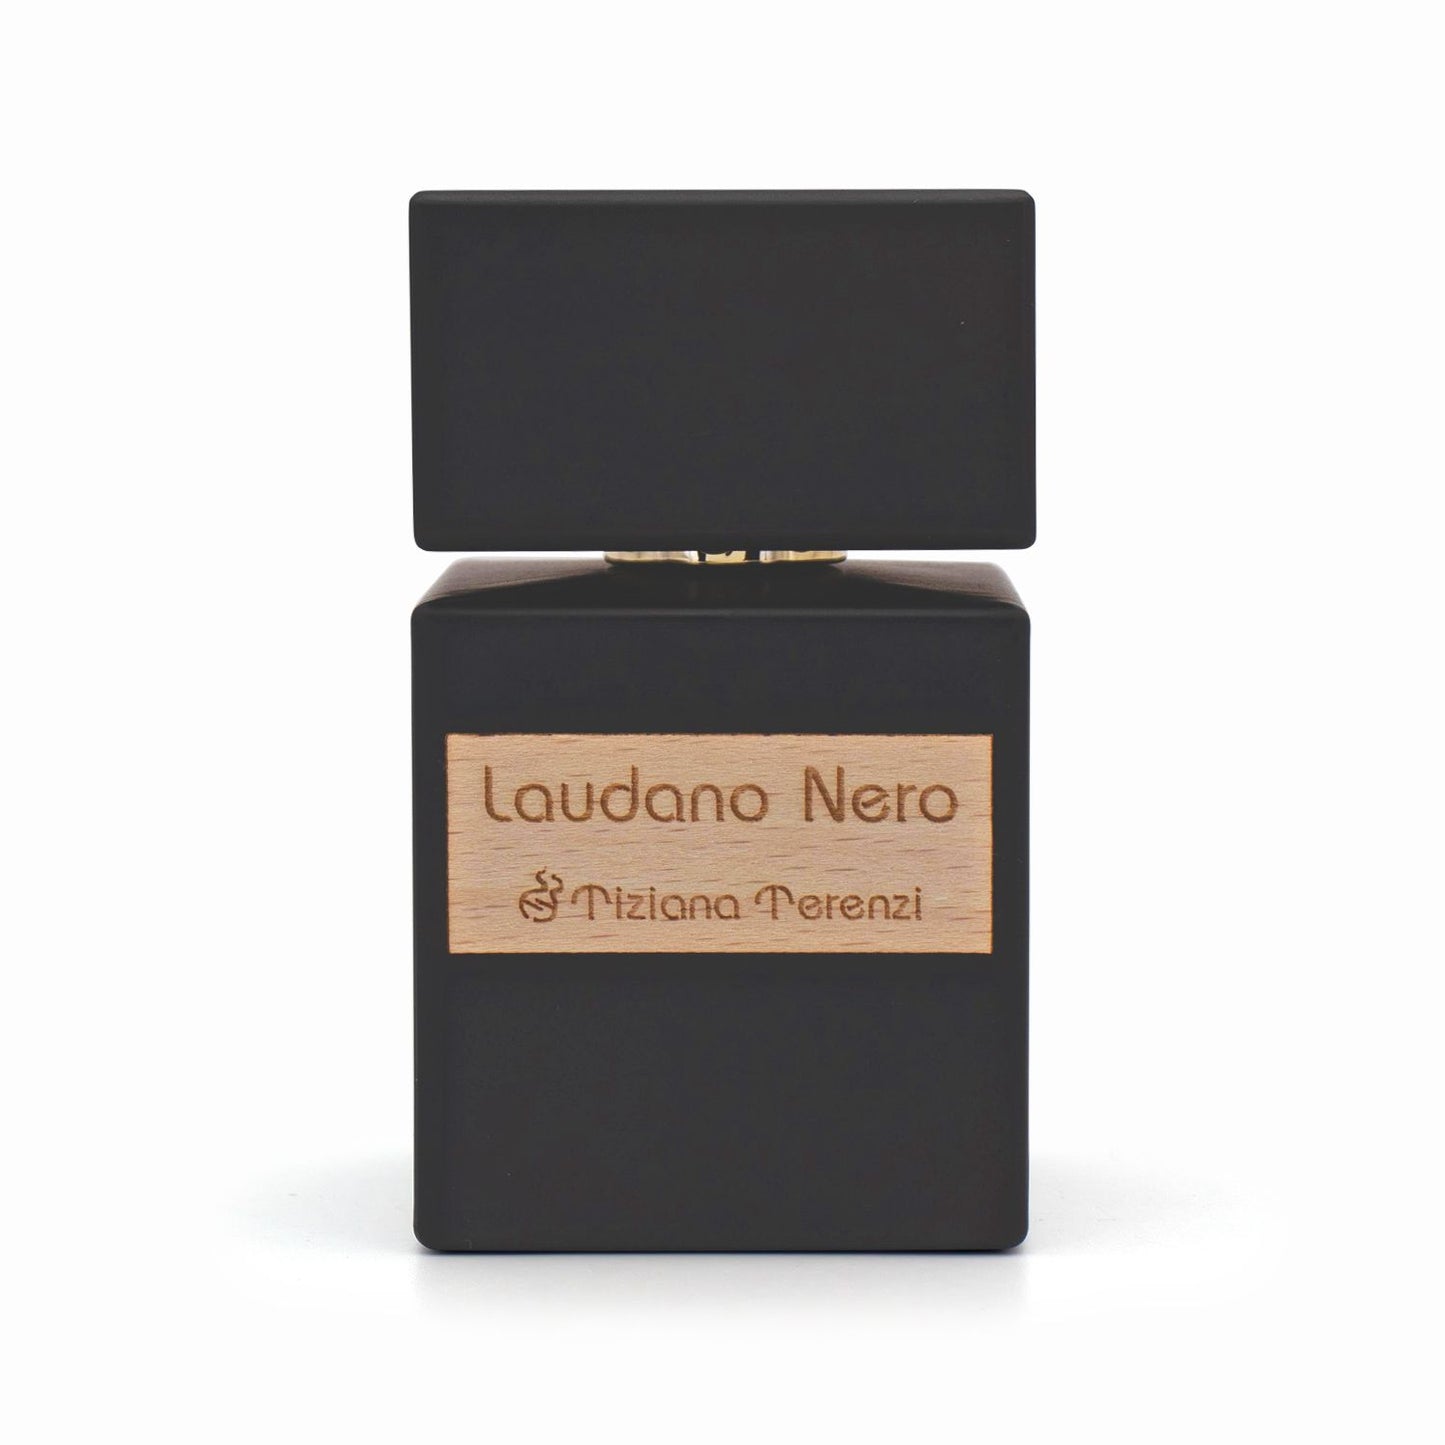 TIZIANA TERENZI Laudano Nero Extrait Eau De Parfum 100ml - Imperfect Box